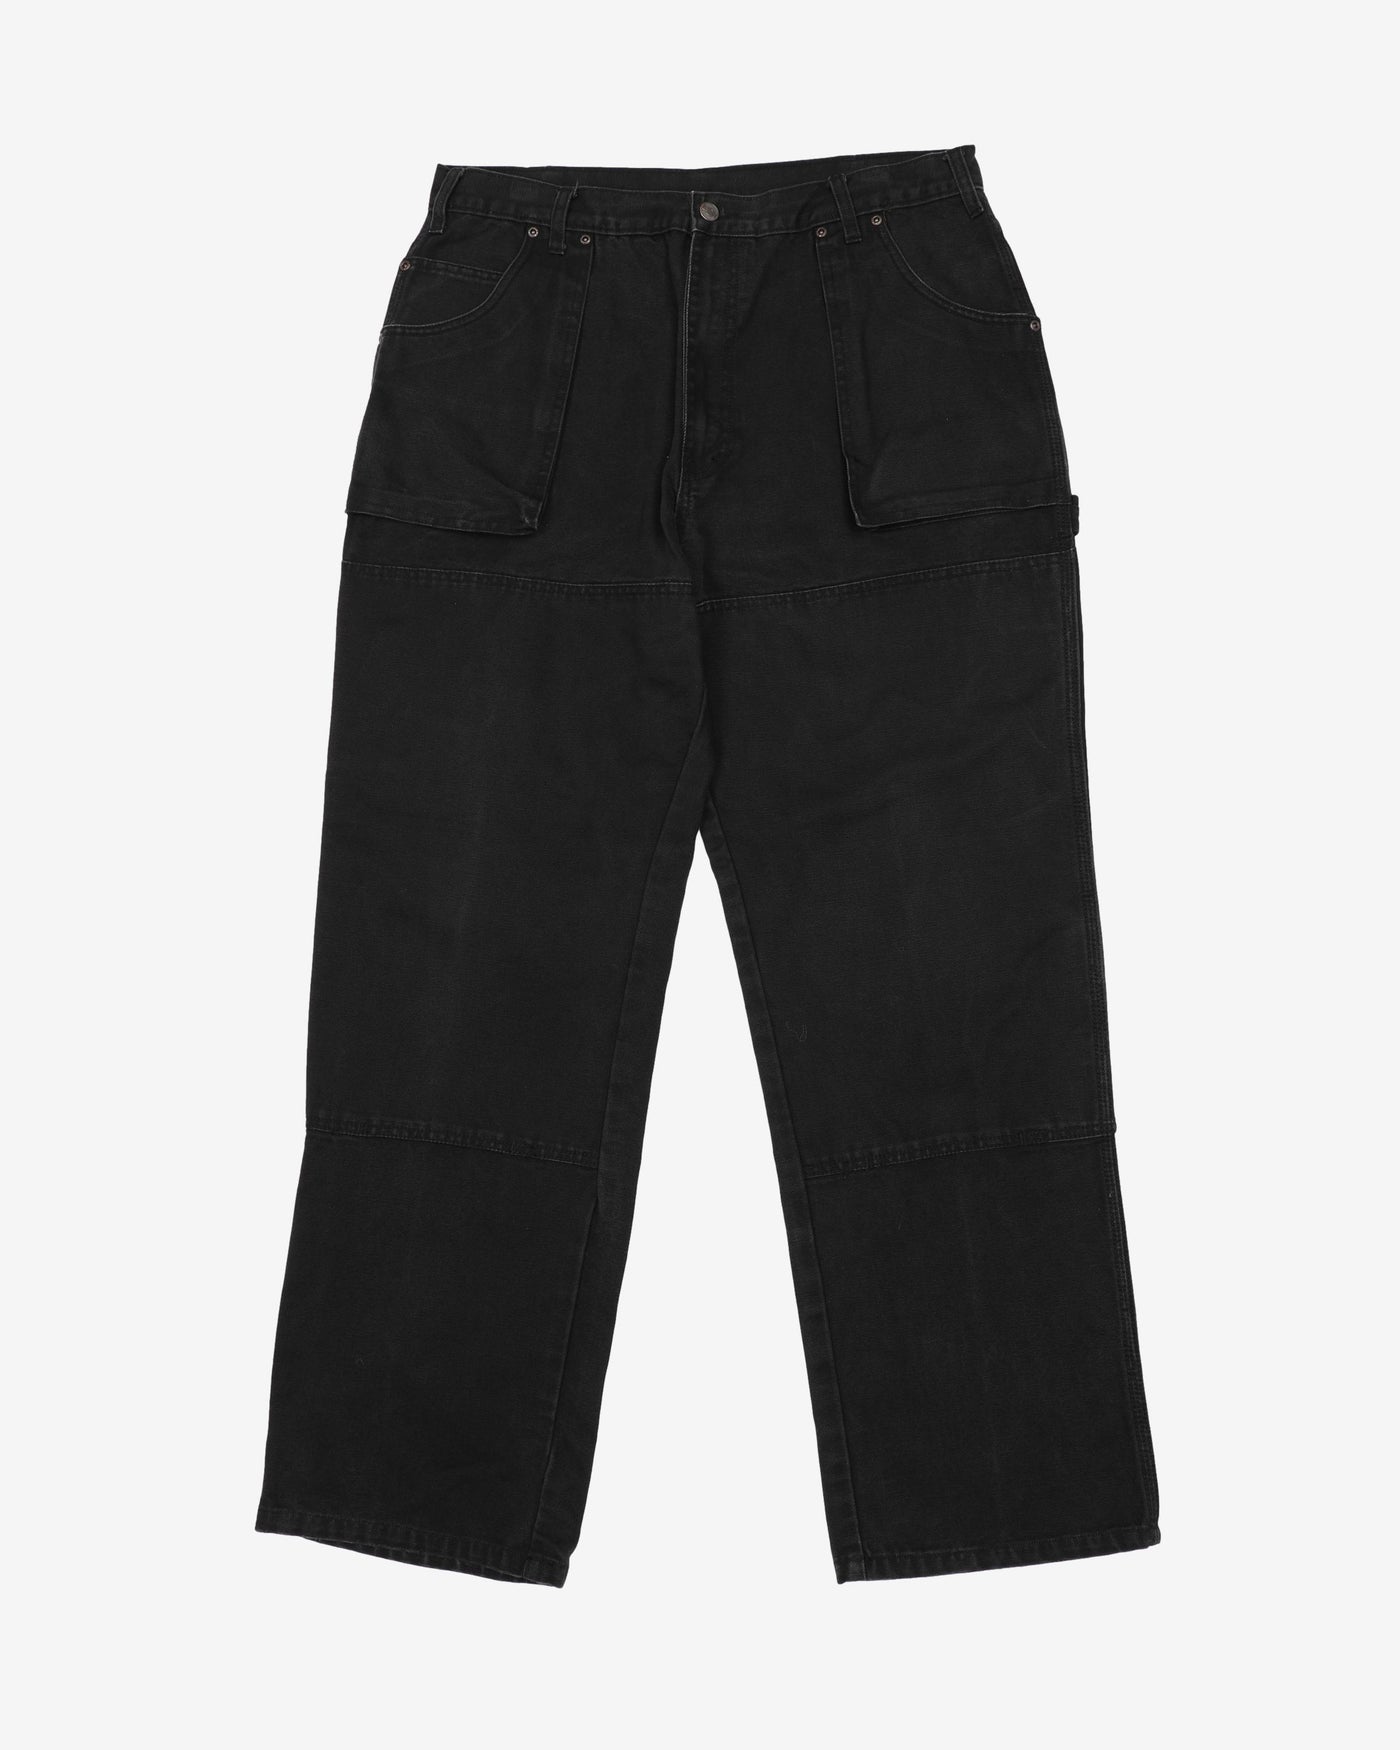 Dickies Black Double Knee Workwear Jeans - W36 L30